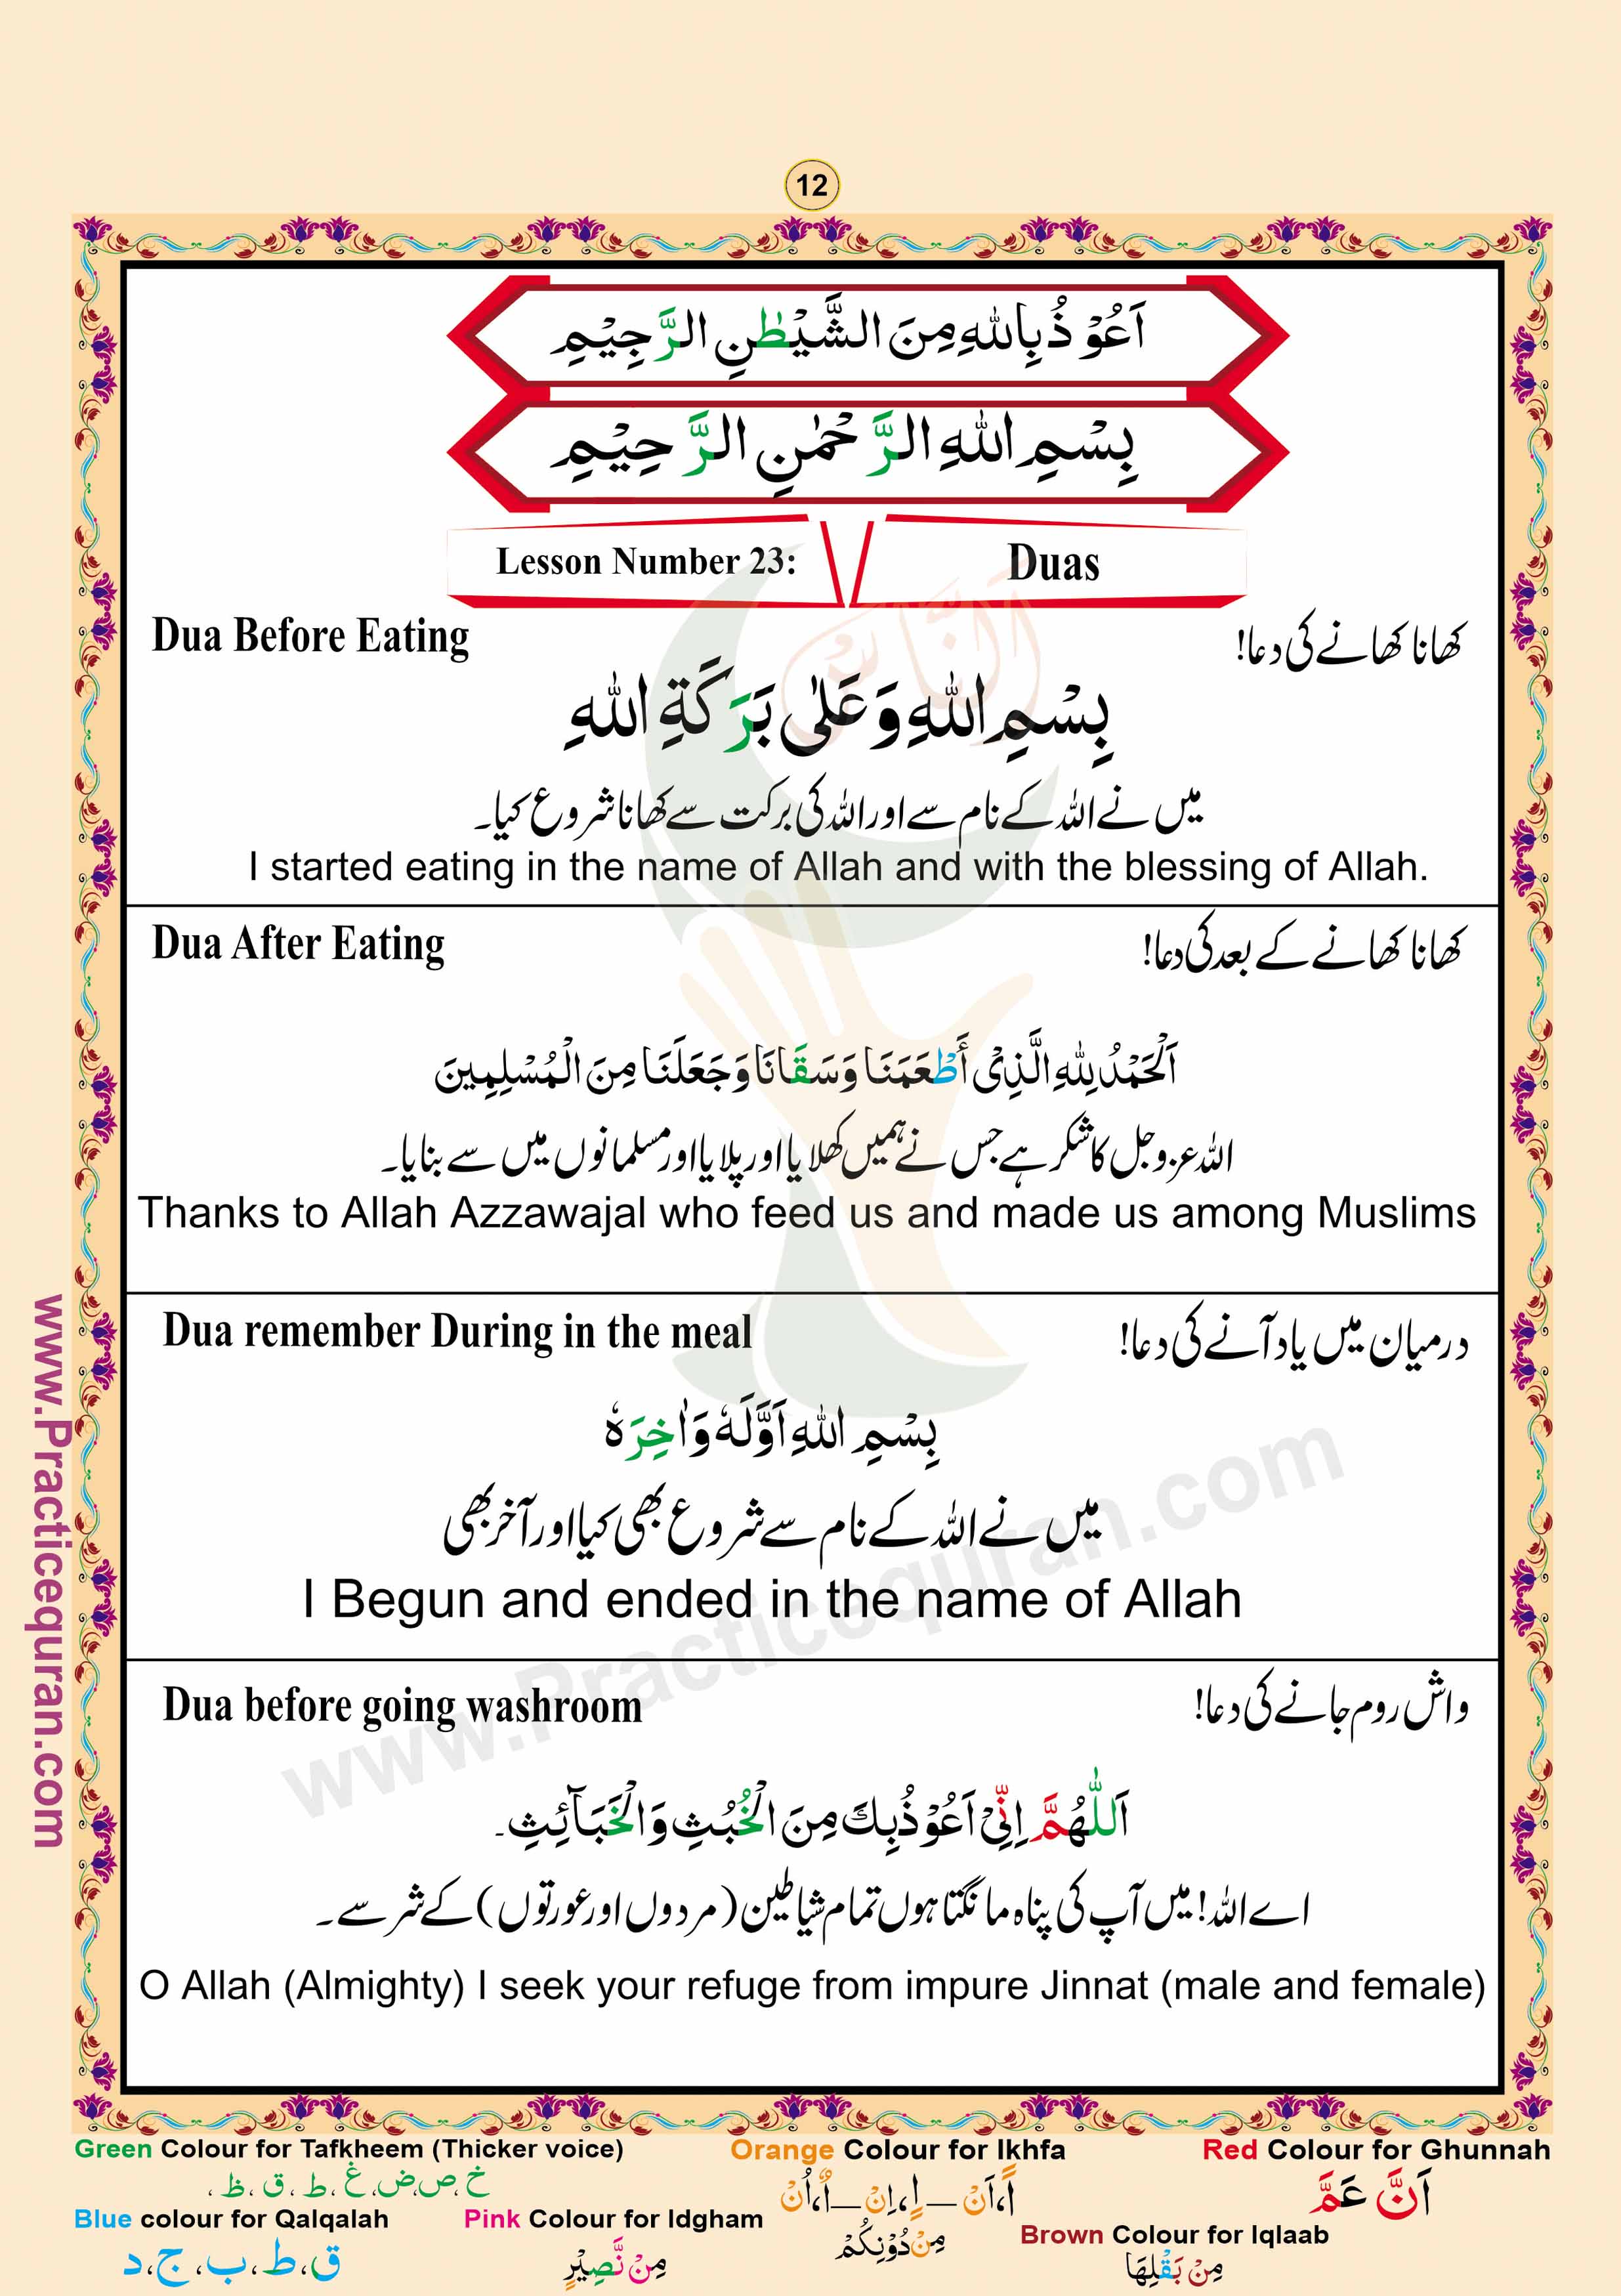 Read Namaz (Salah) Page No 12, Practice Quran